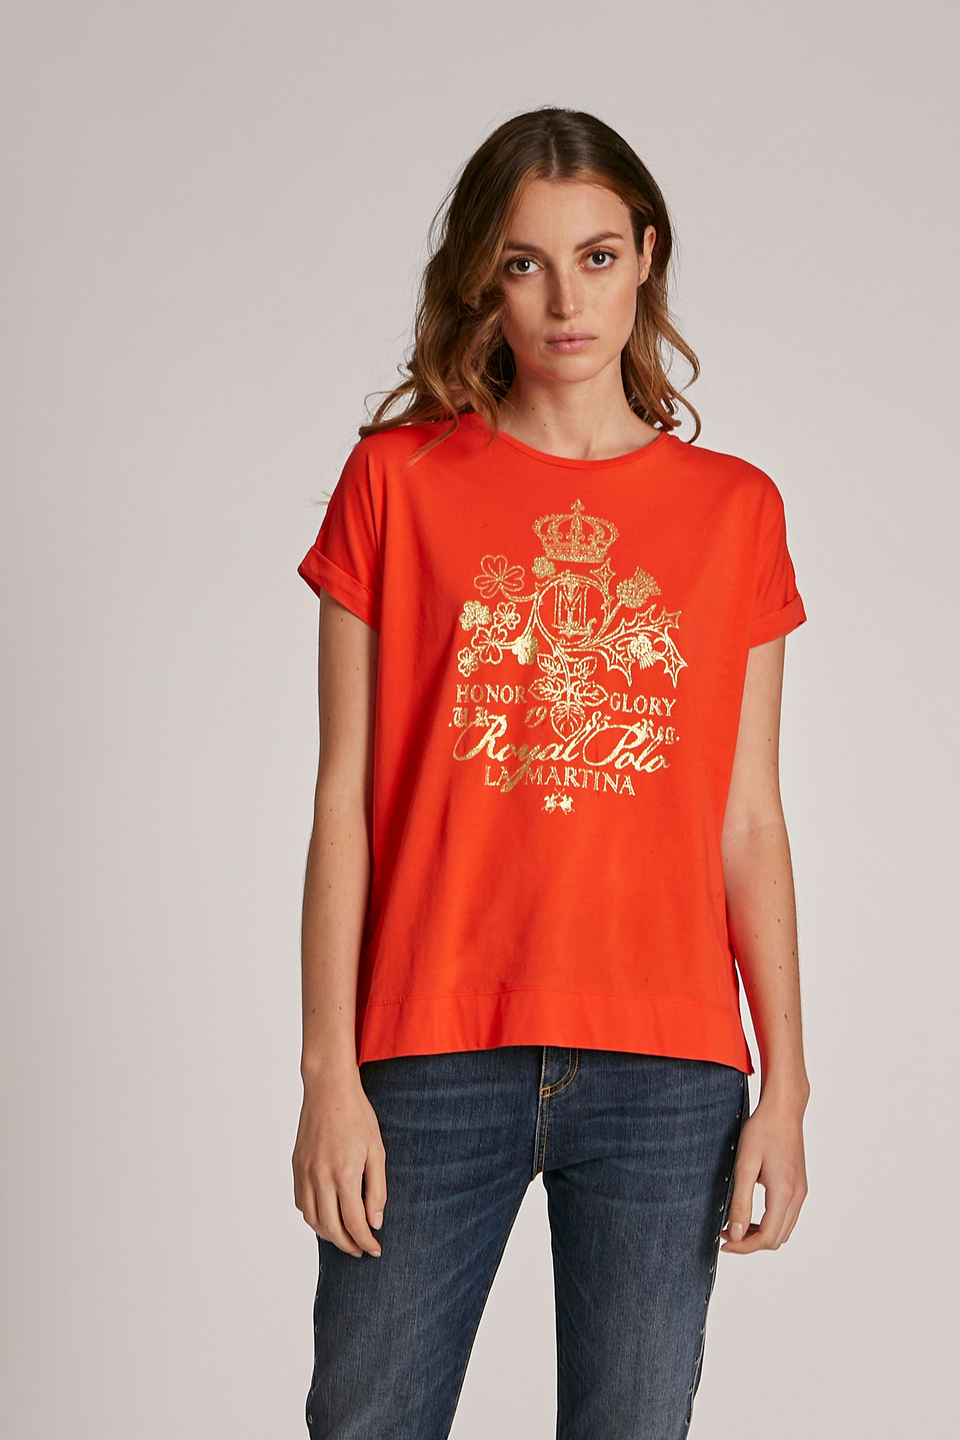 T-shirt da donna in cotone con logo modello over - La Martina - Official Online Shop